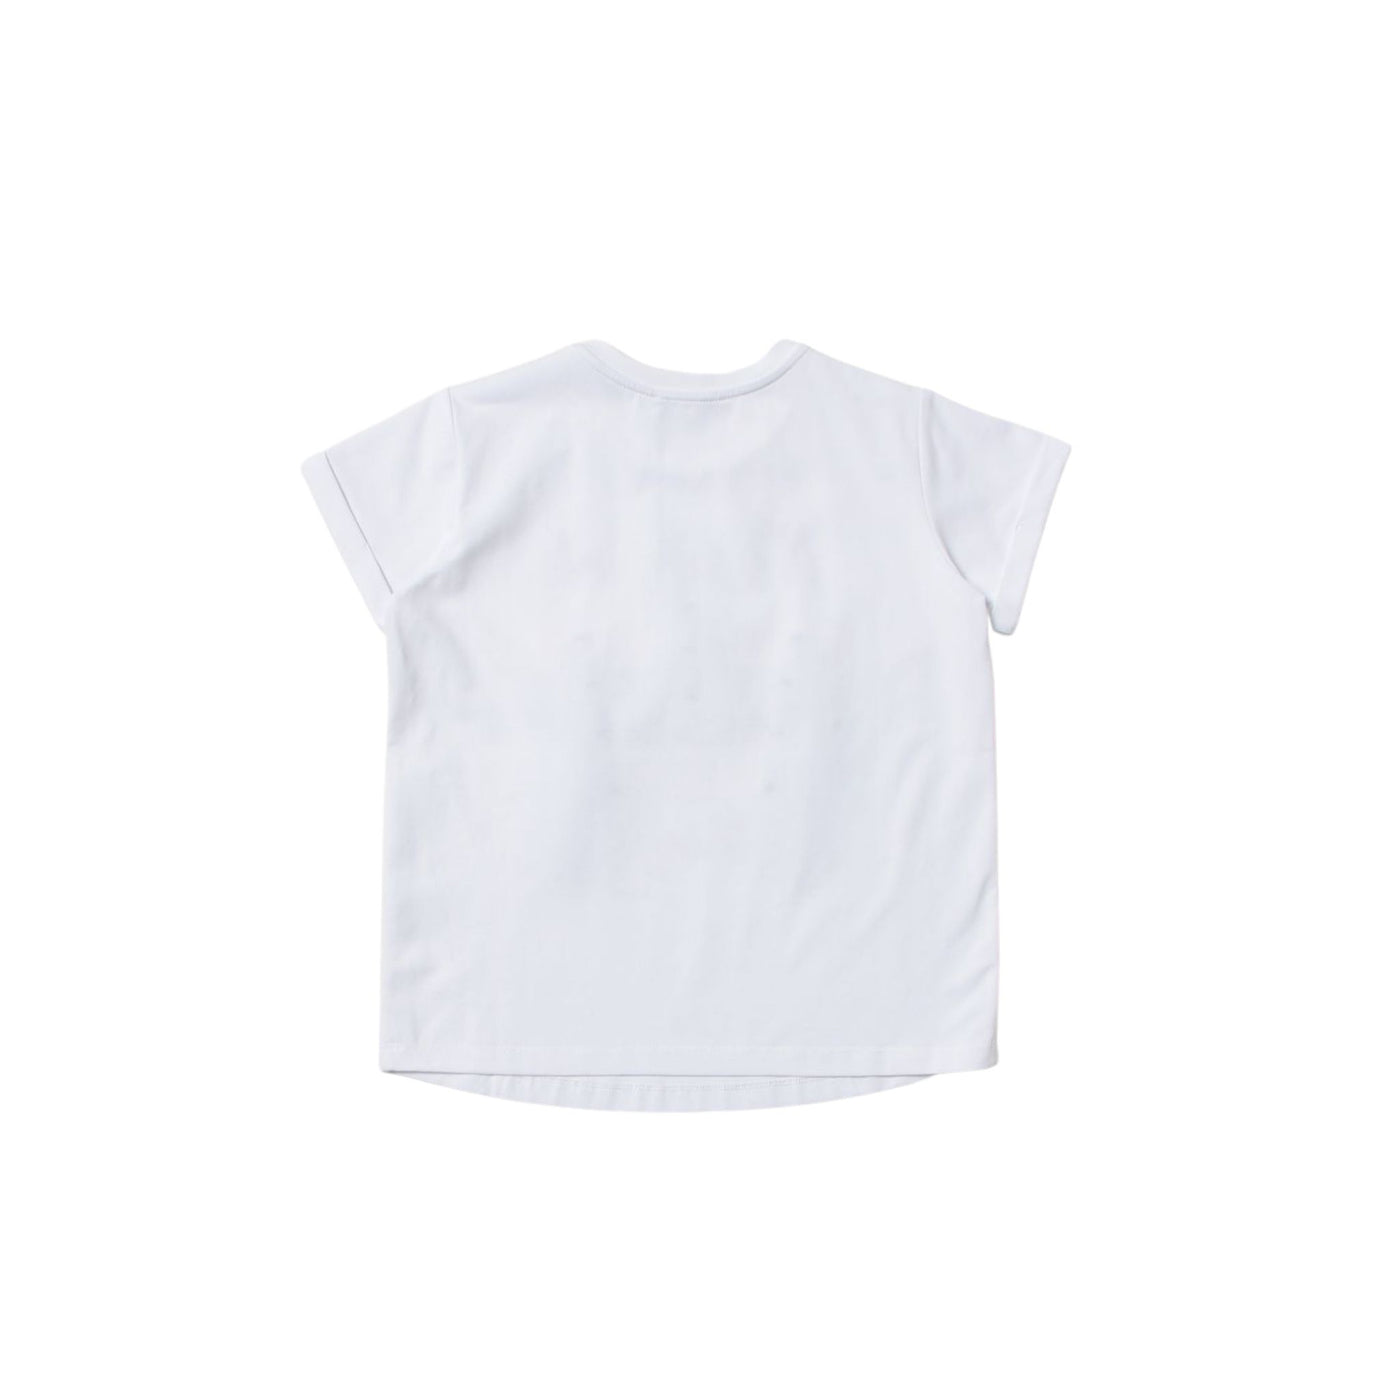 T-shirt bambina bianca firmata Twinset vista retro